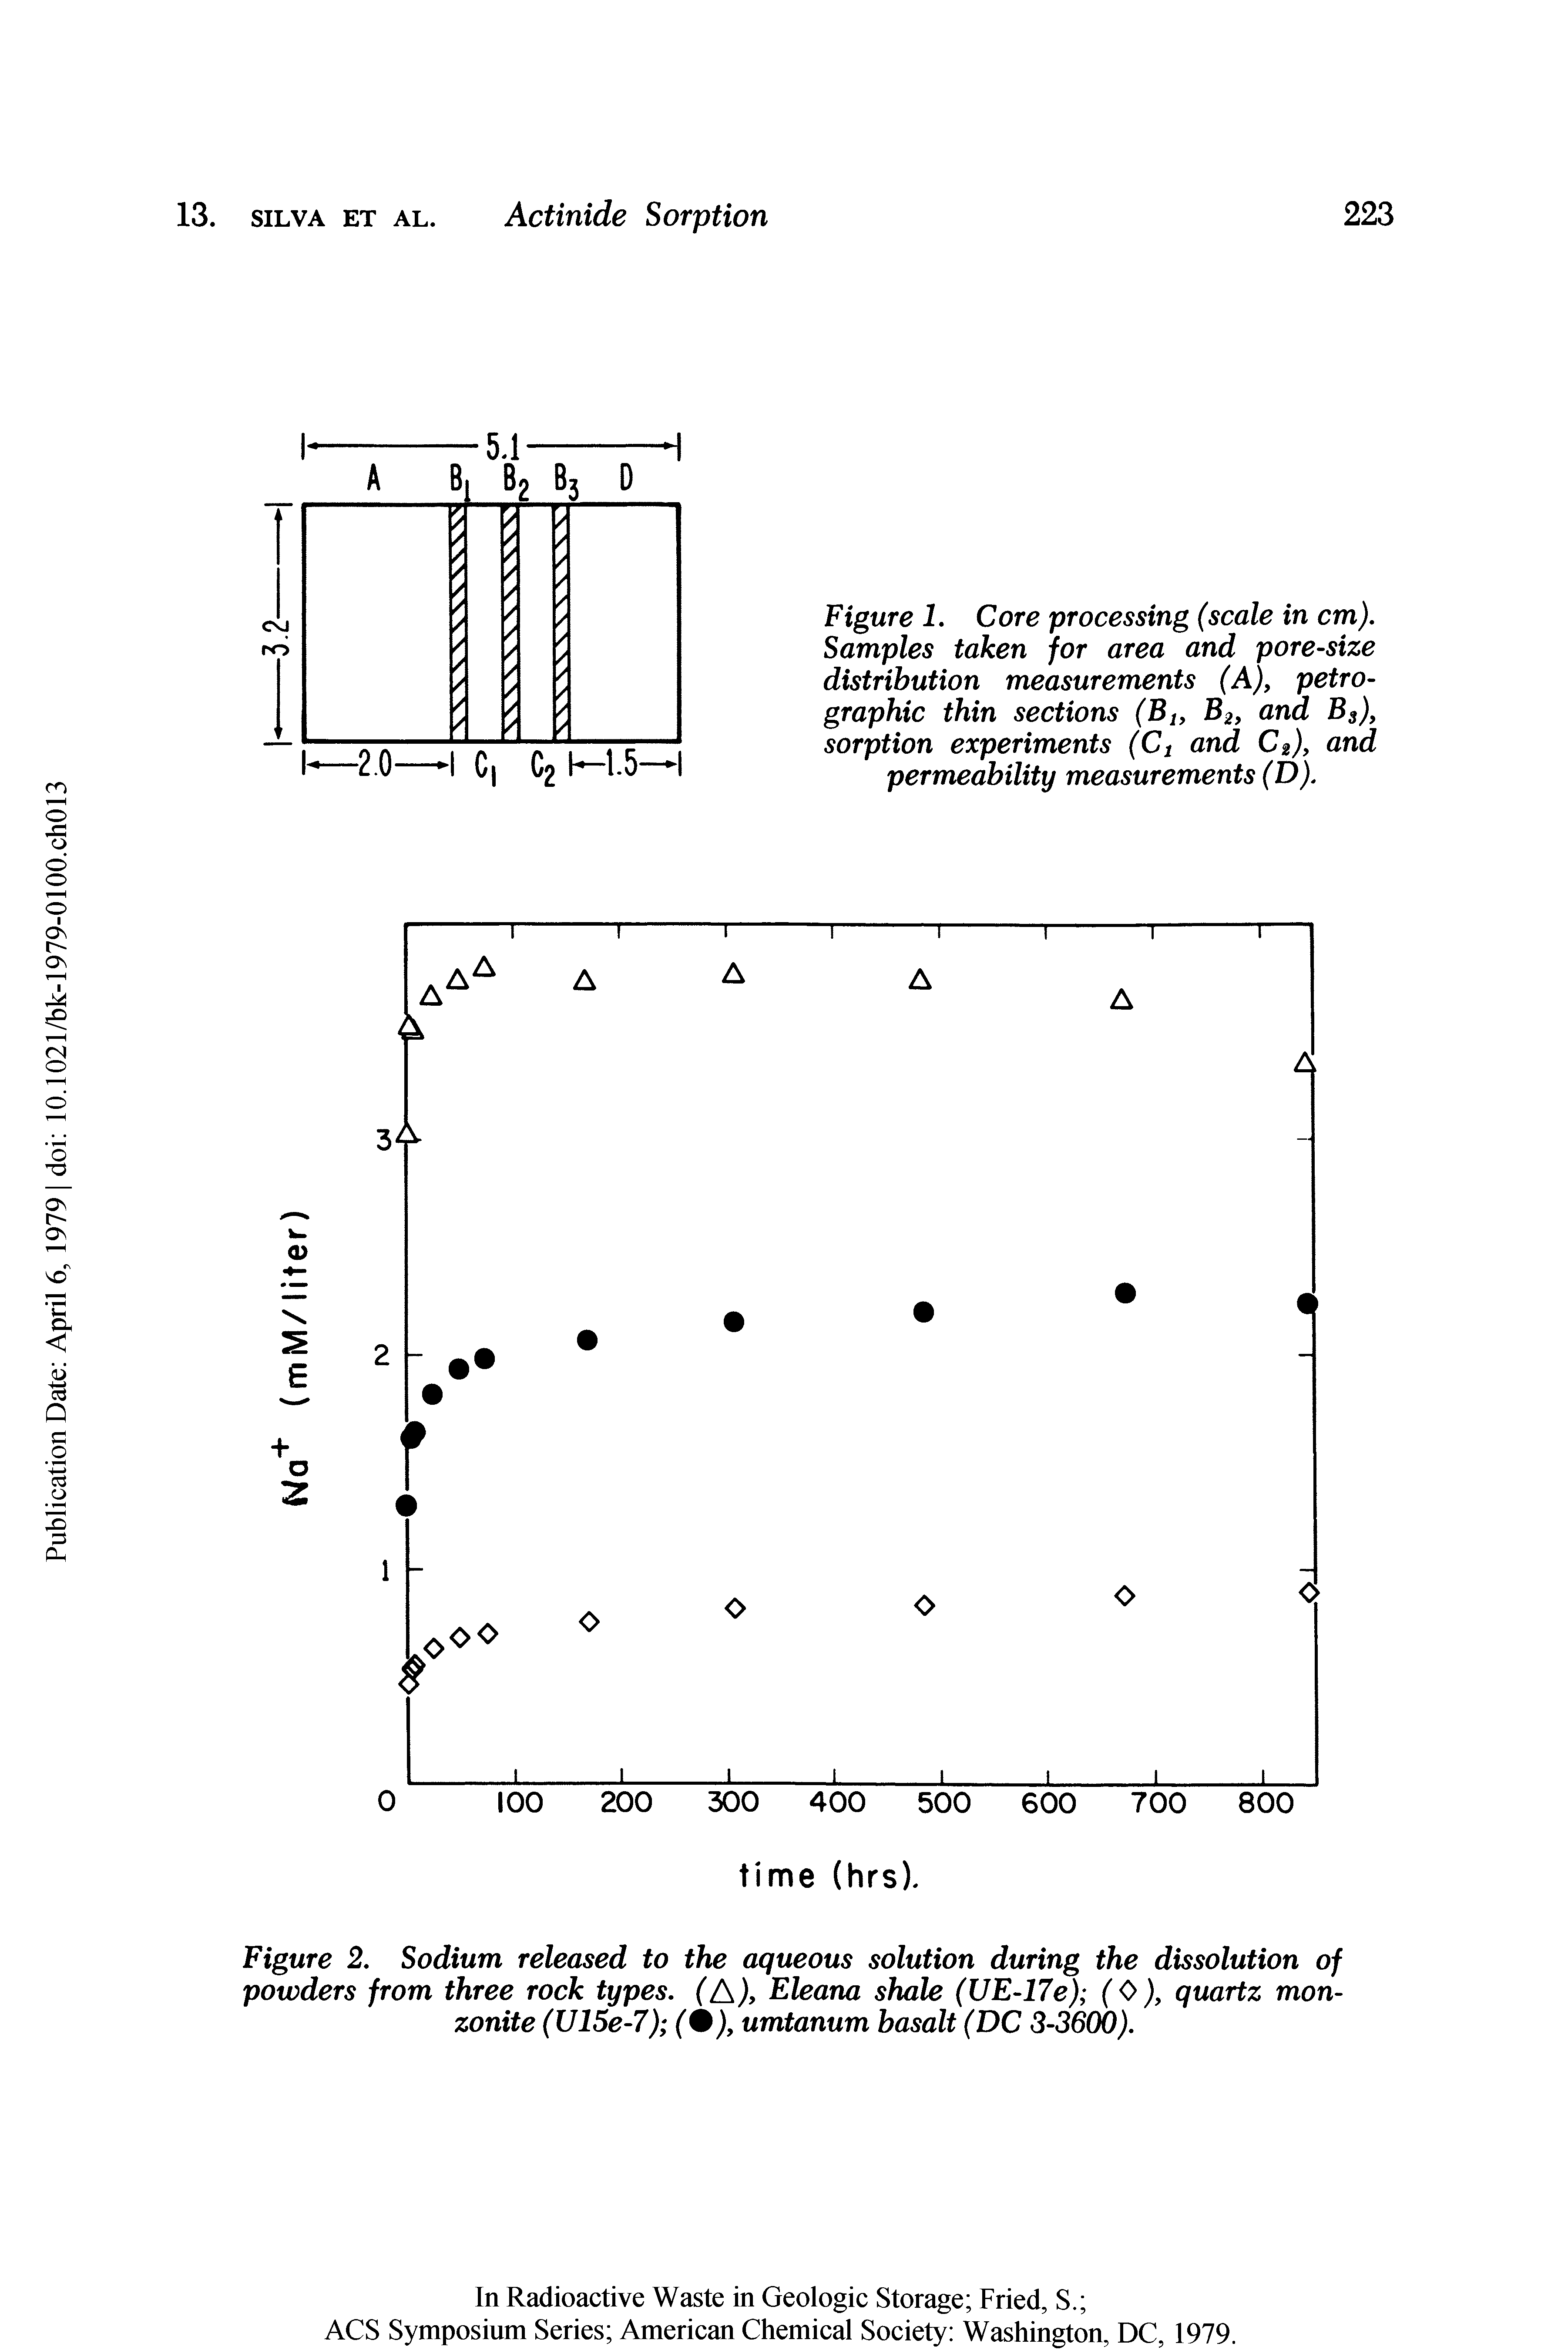 Figure 2. Sodium released to the aqueous solution during the dissolution of powders from three rock types. ( ), Eleana shale (UE-17e) (0), quartz mon-zonite (U15e-7) ( ), umtanum basalt (DC 3-3600).